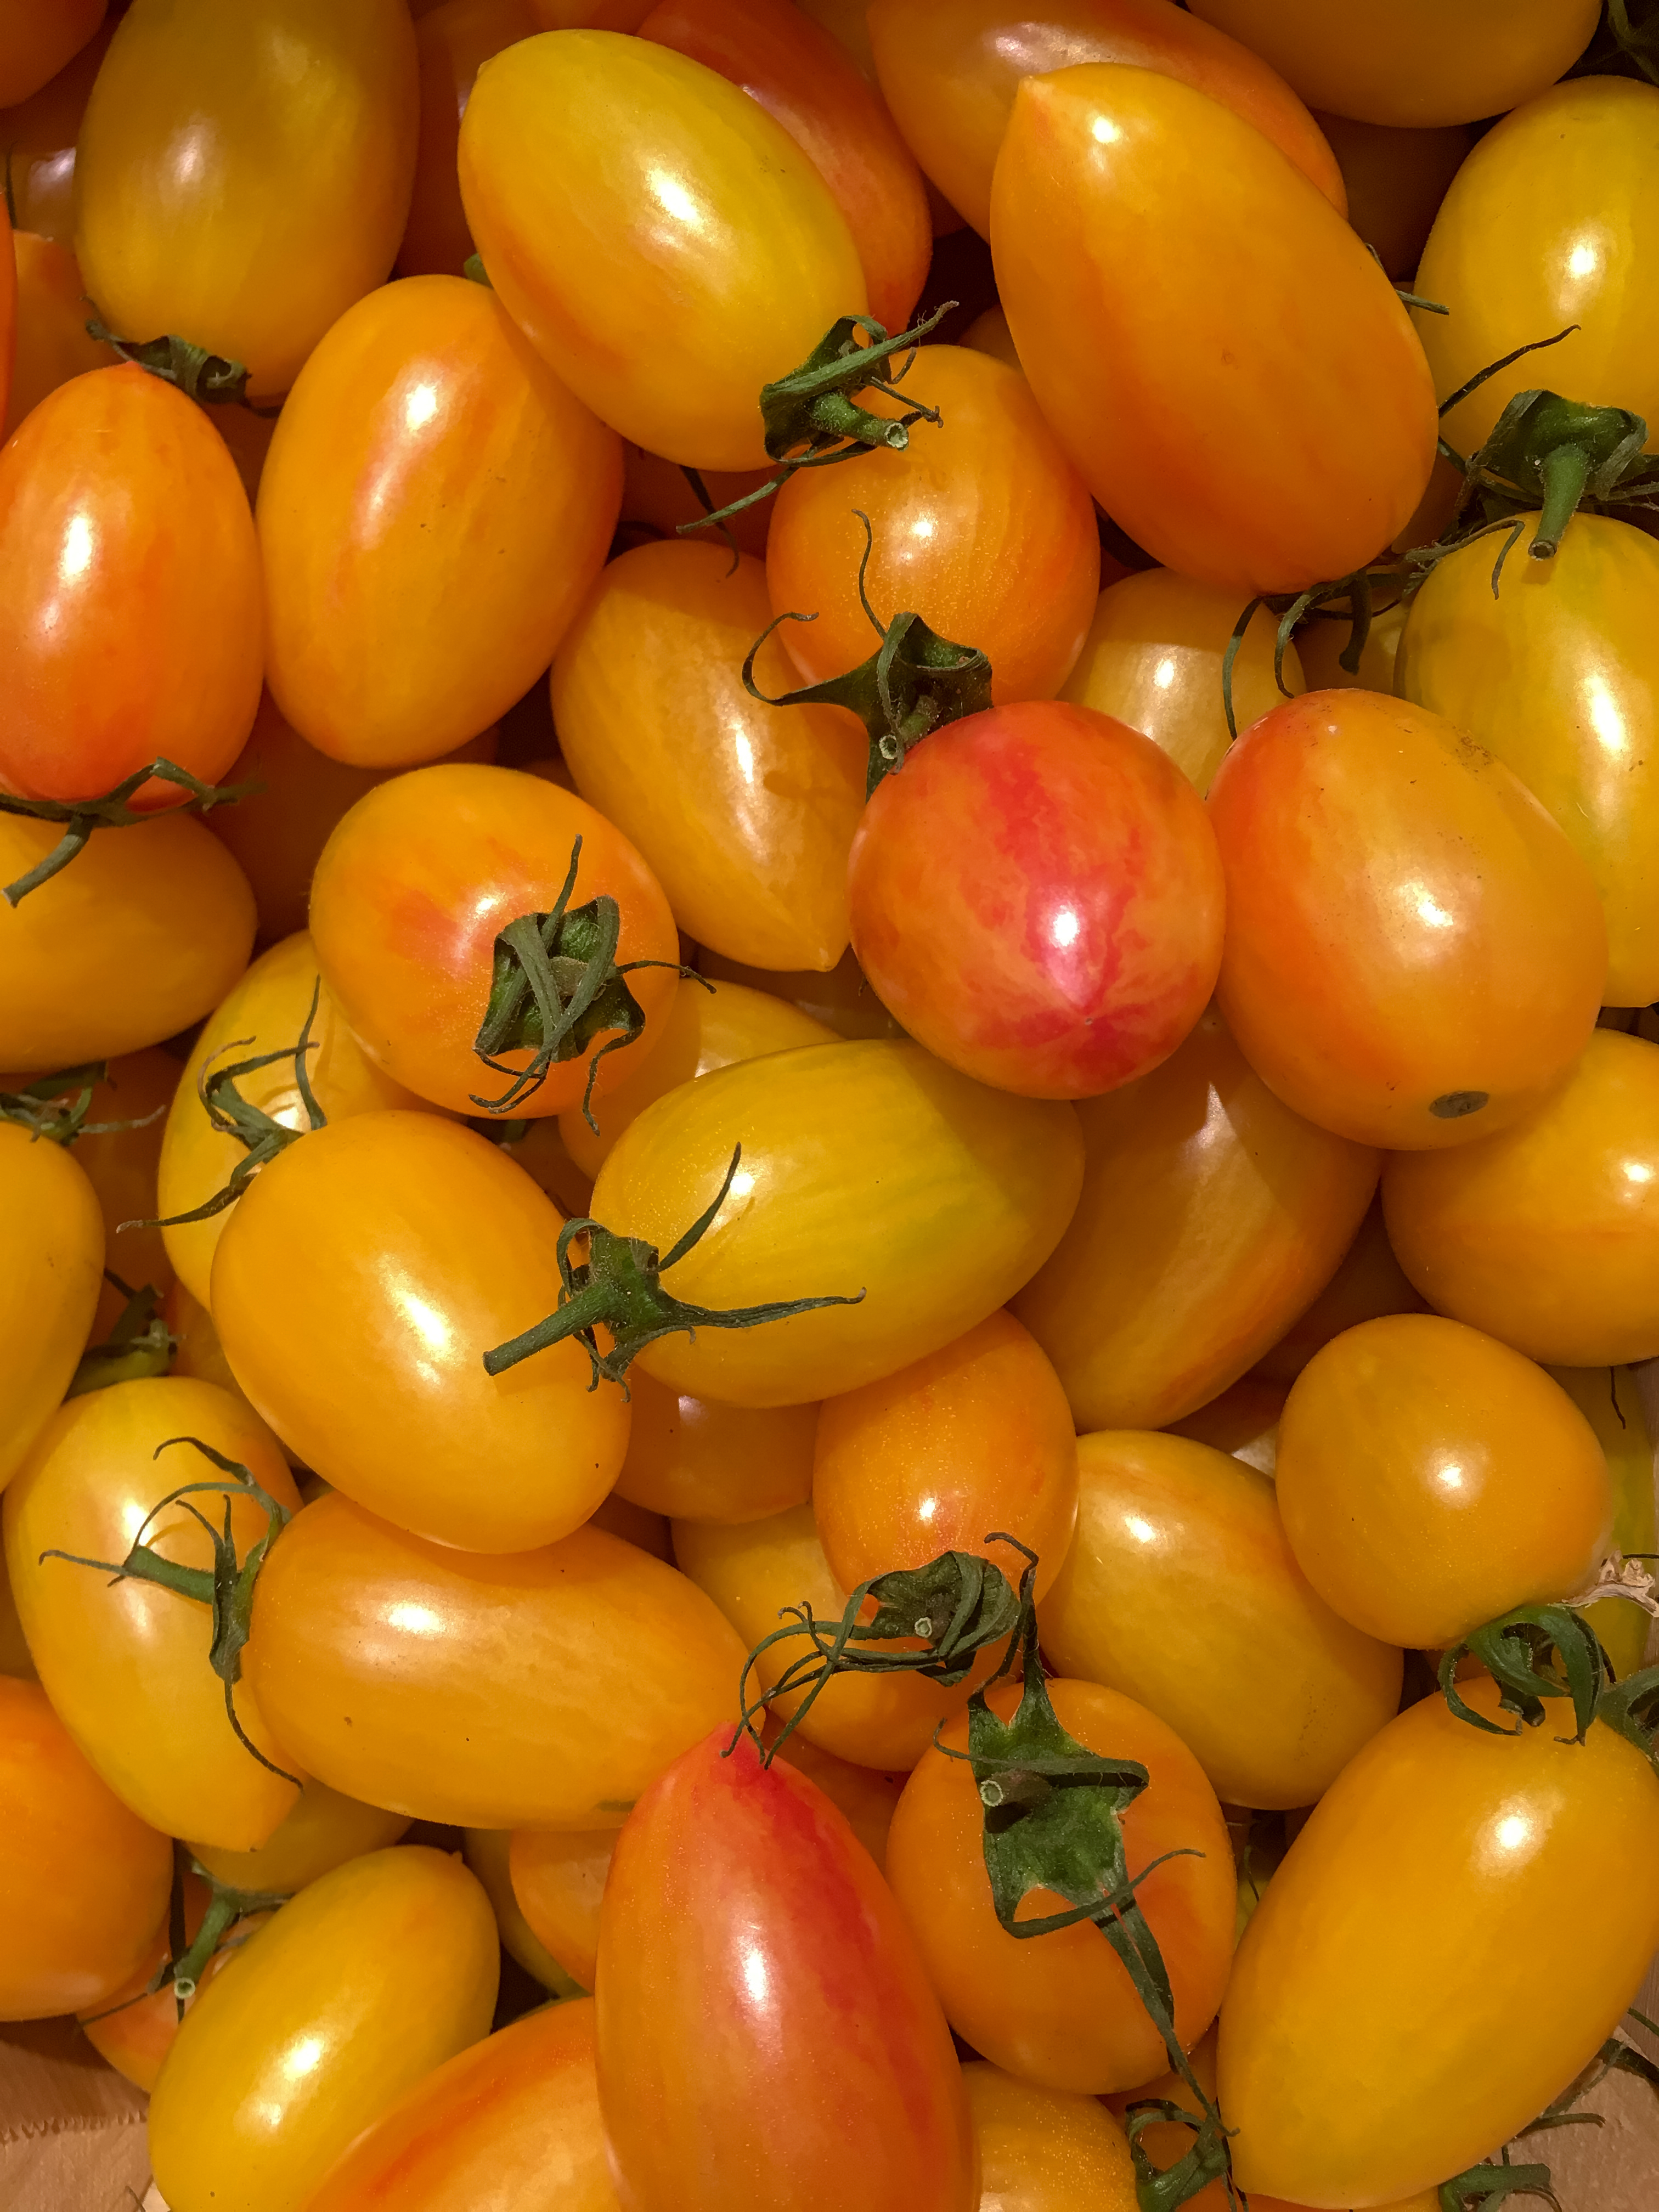 Seedeo® Tomate Artisan Blush Tiger (Lycopersicum L.) 25 Samen BIO